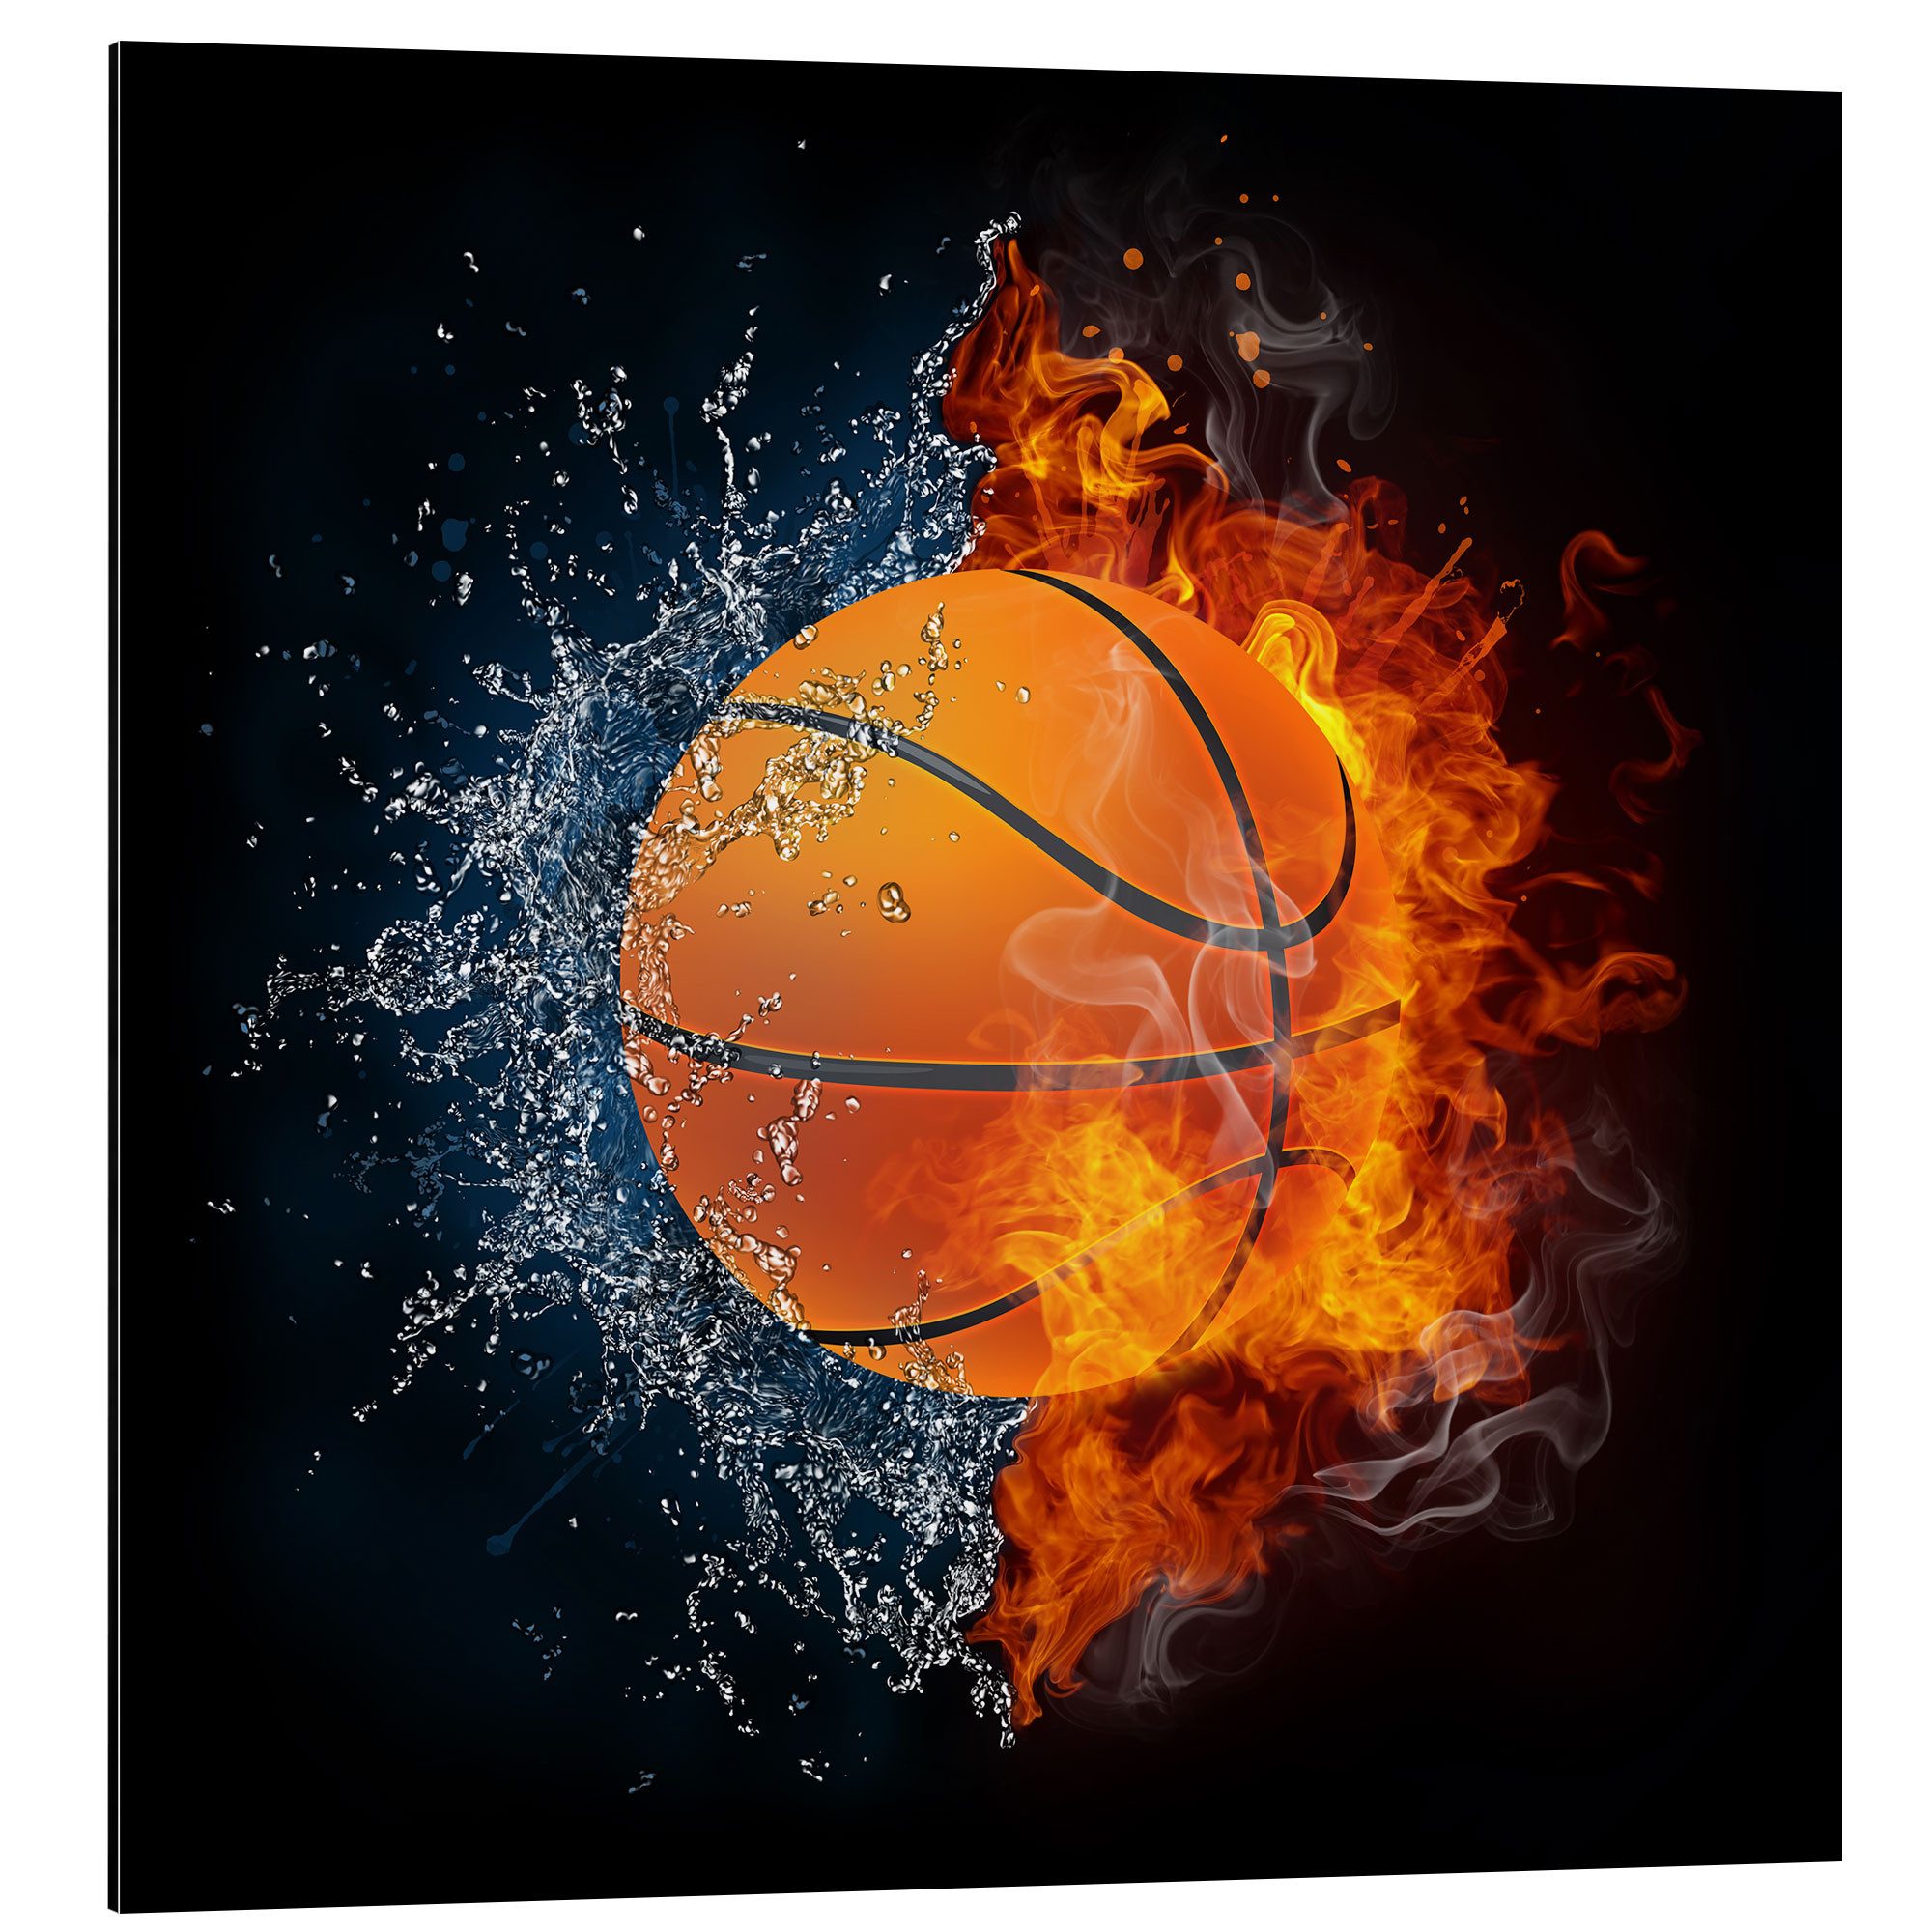 Posterlounge Alu-Dibond-Druck Editors Choice, Der Basketball im Kampf der Elemente, Digitale Kunst